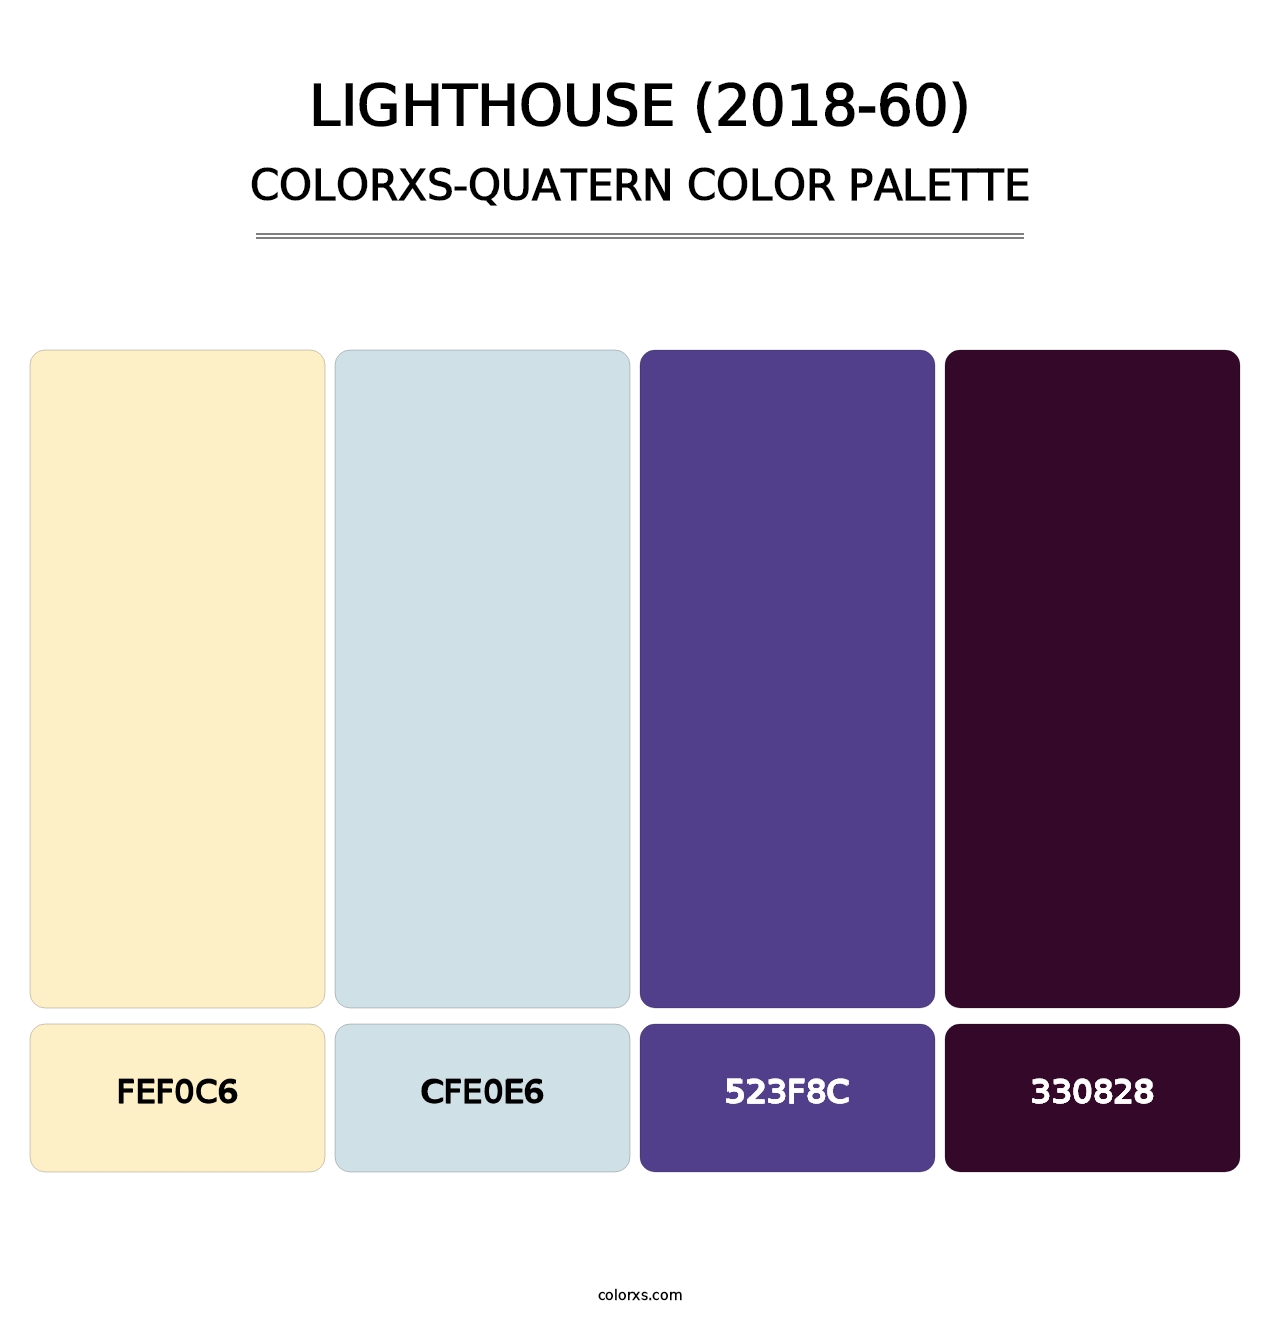 Lighthouse (2018-60) - Colorxs Quatern Palette